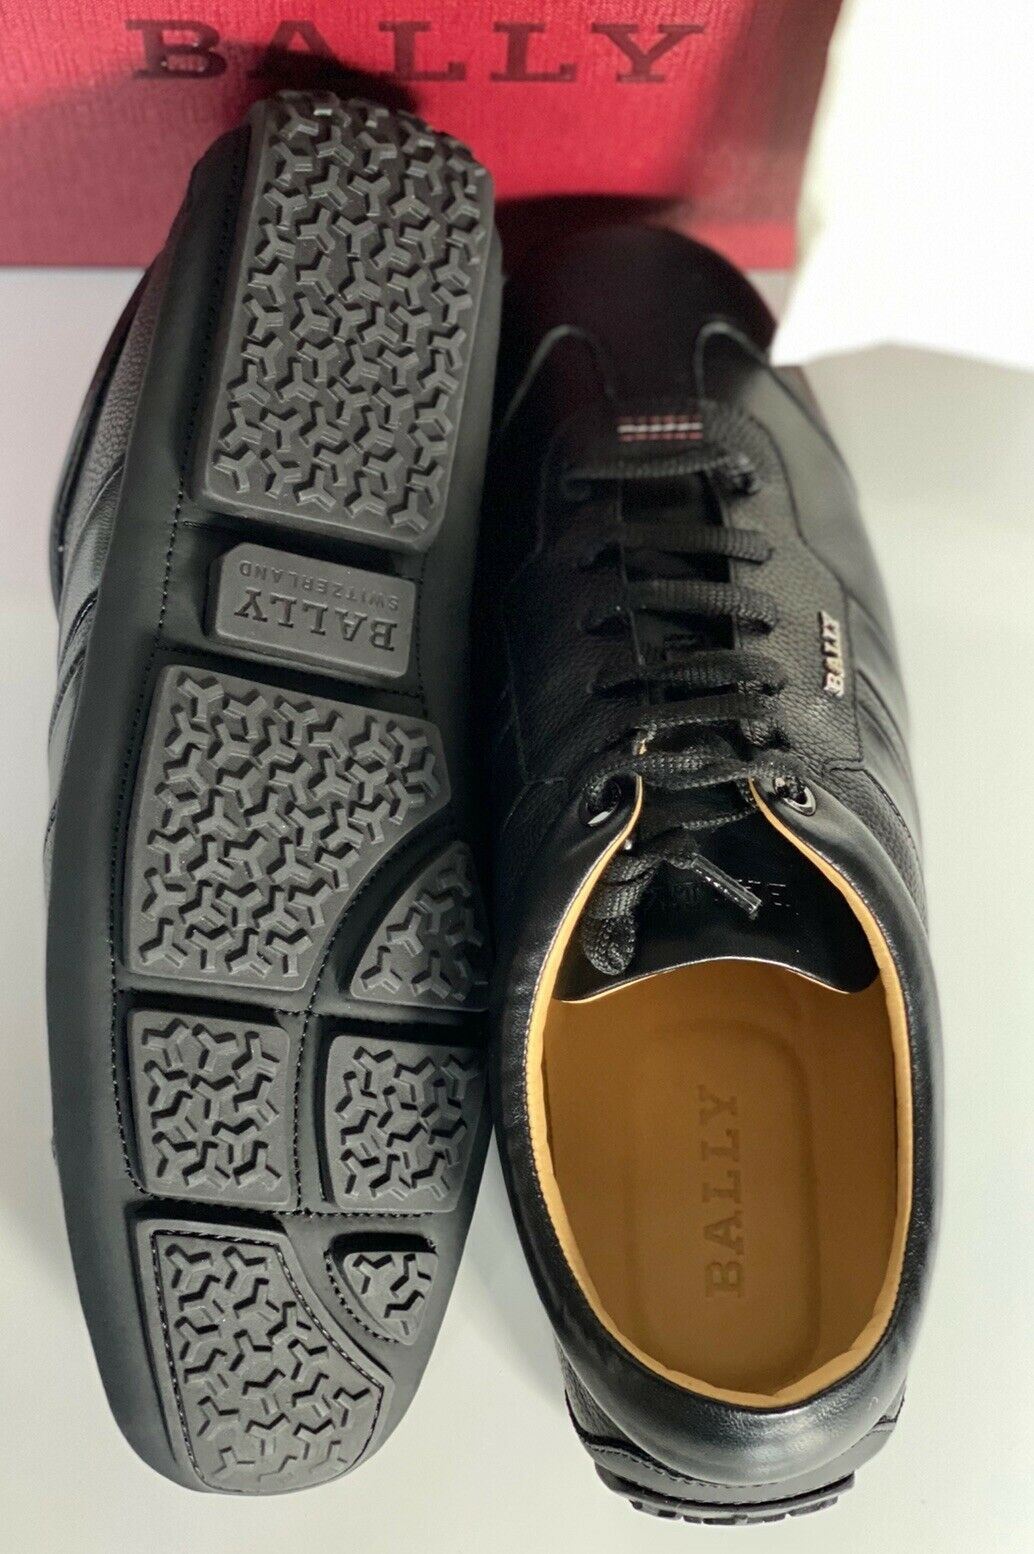 NIB Bally Primer Mens Bovine Embossed Leather Sneakers Black 11 D US 6234861 IT